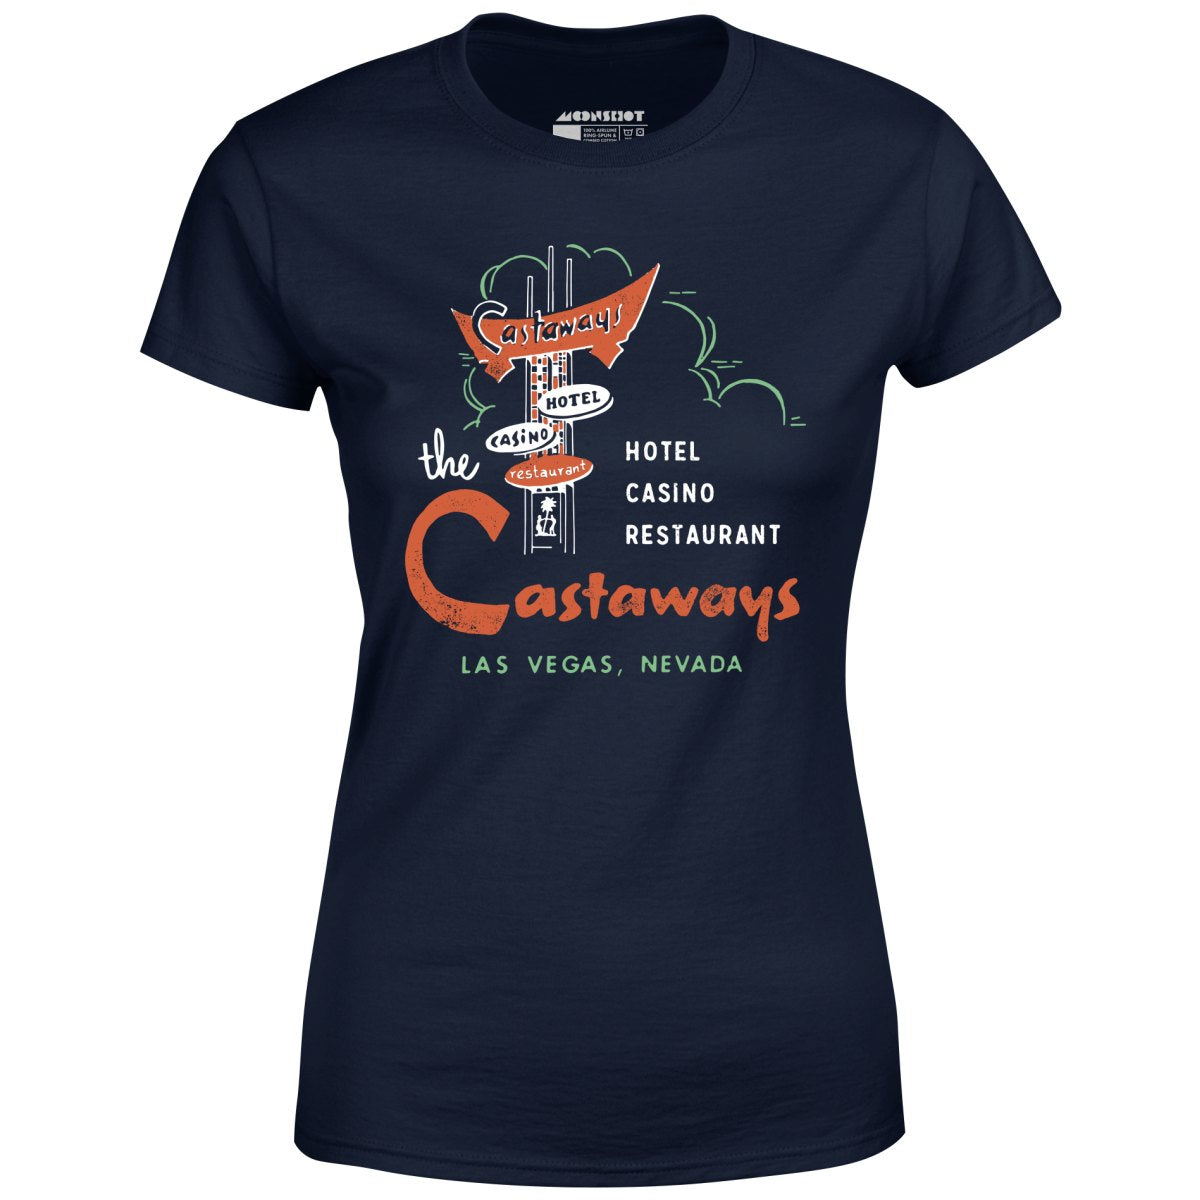 Castaways - Vintage Las Vegas - Women's T-Shirt